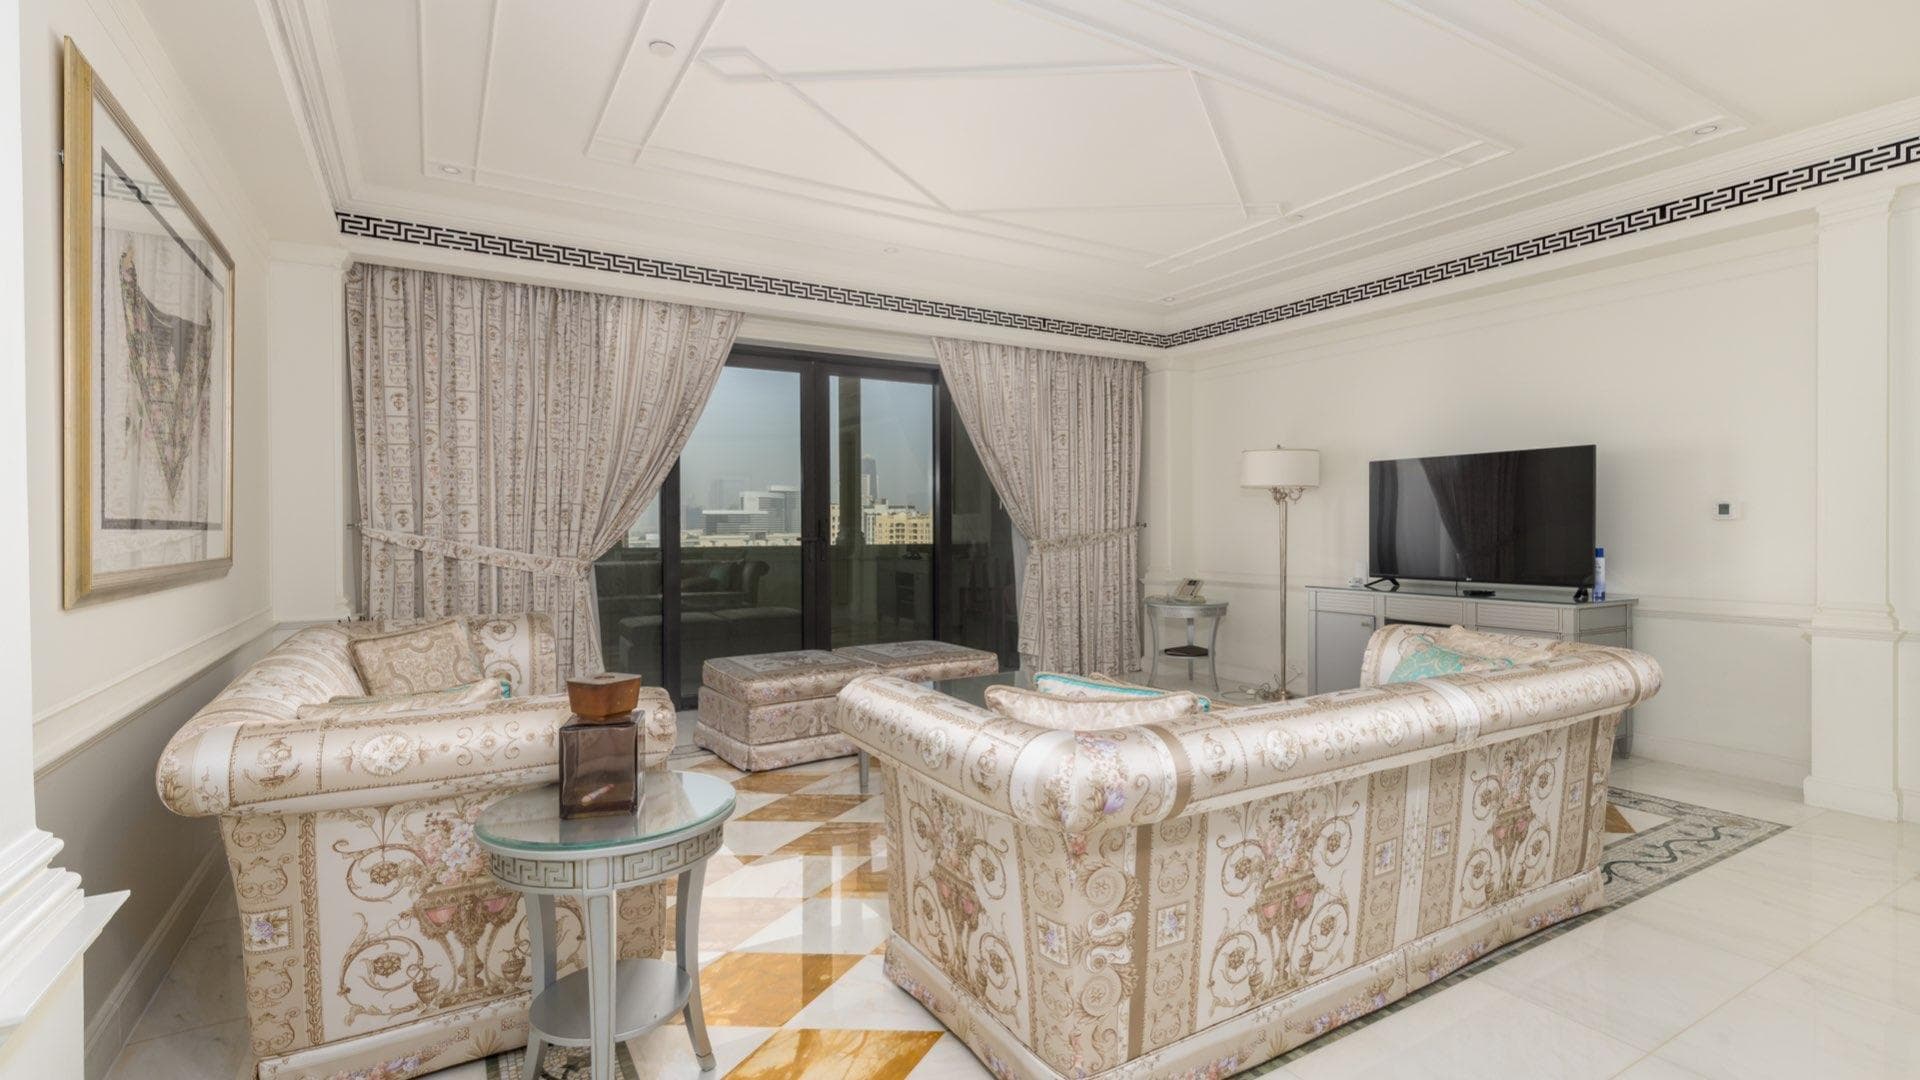 4 Bedroom Penthouse For Rent Palazzo Versace Lp14406 4b34fde23b32540.jpg